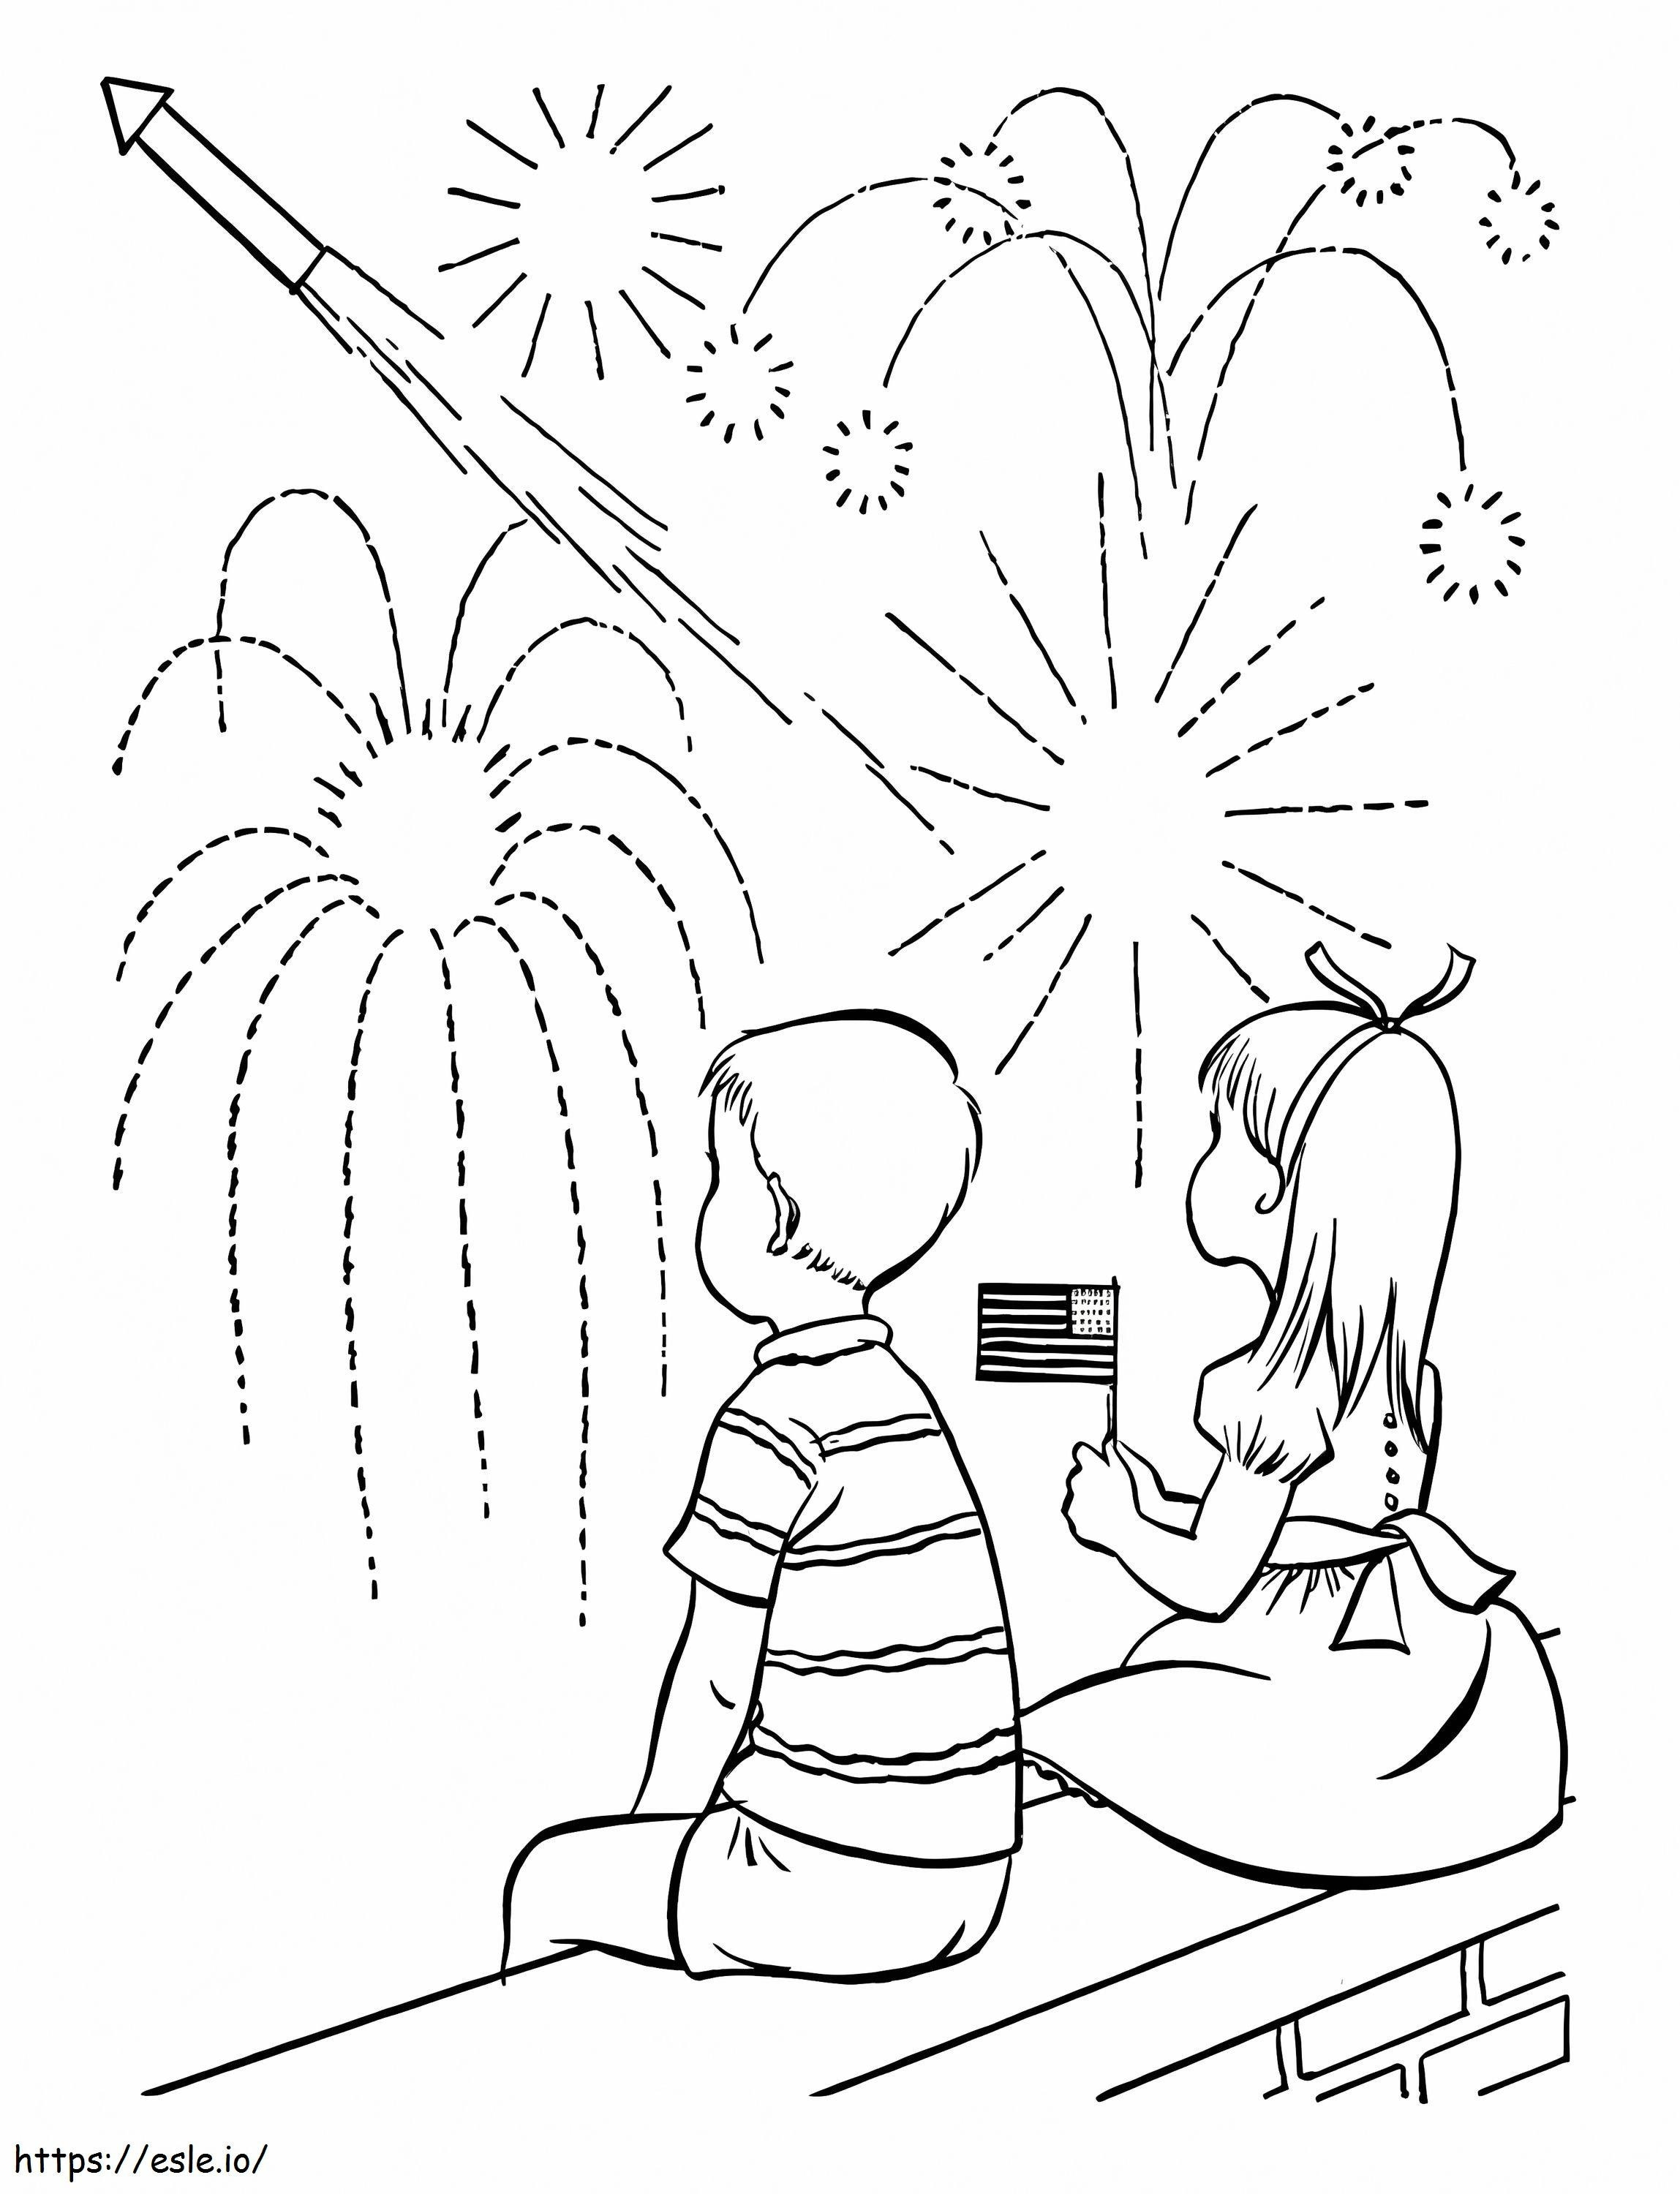 Kid Look Fireworks coloring page